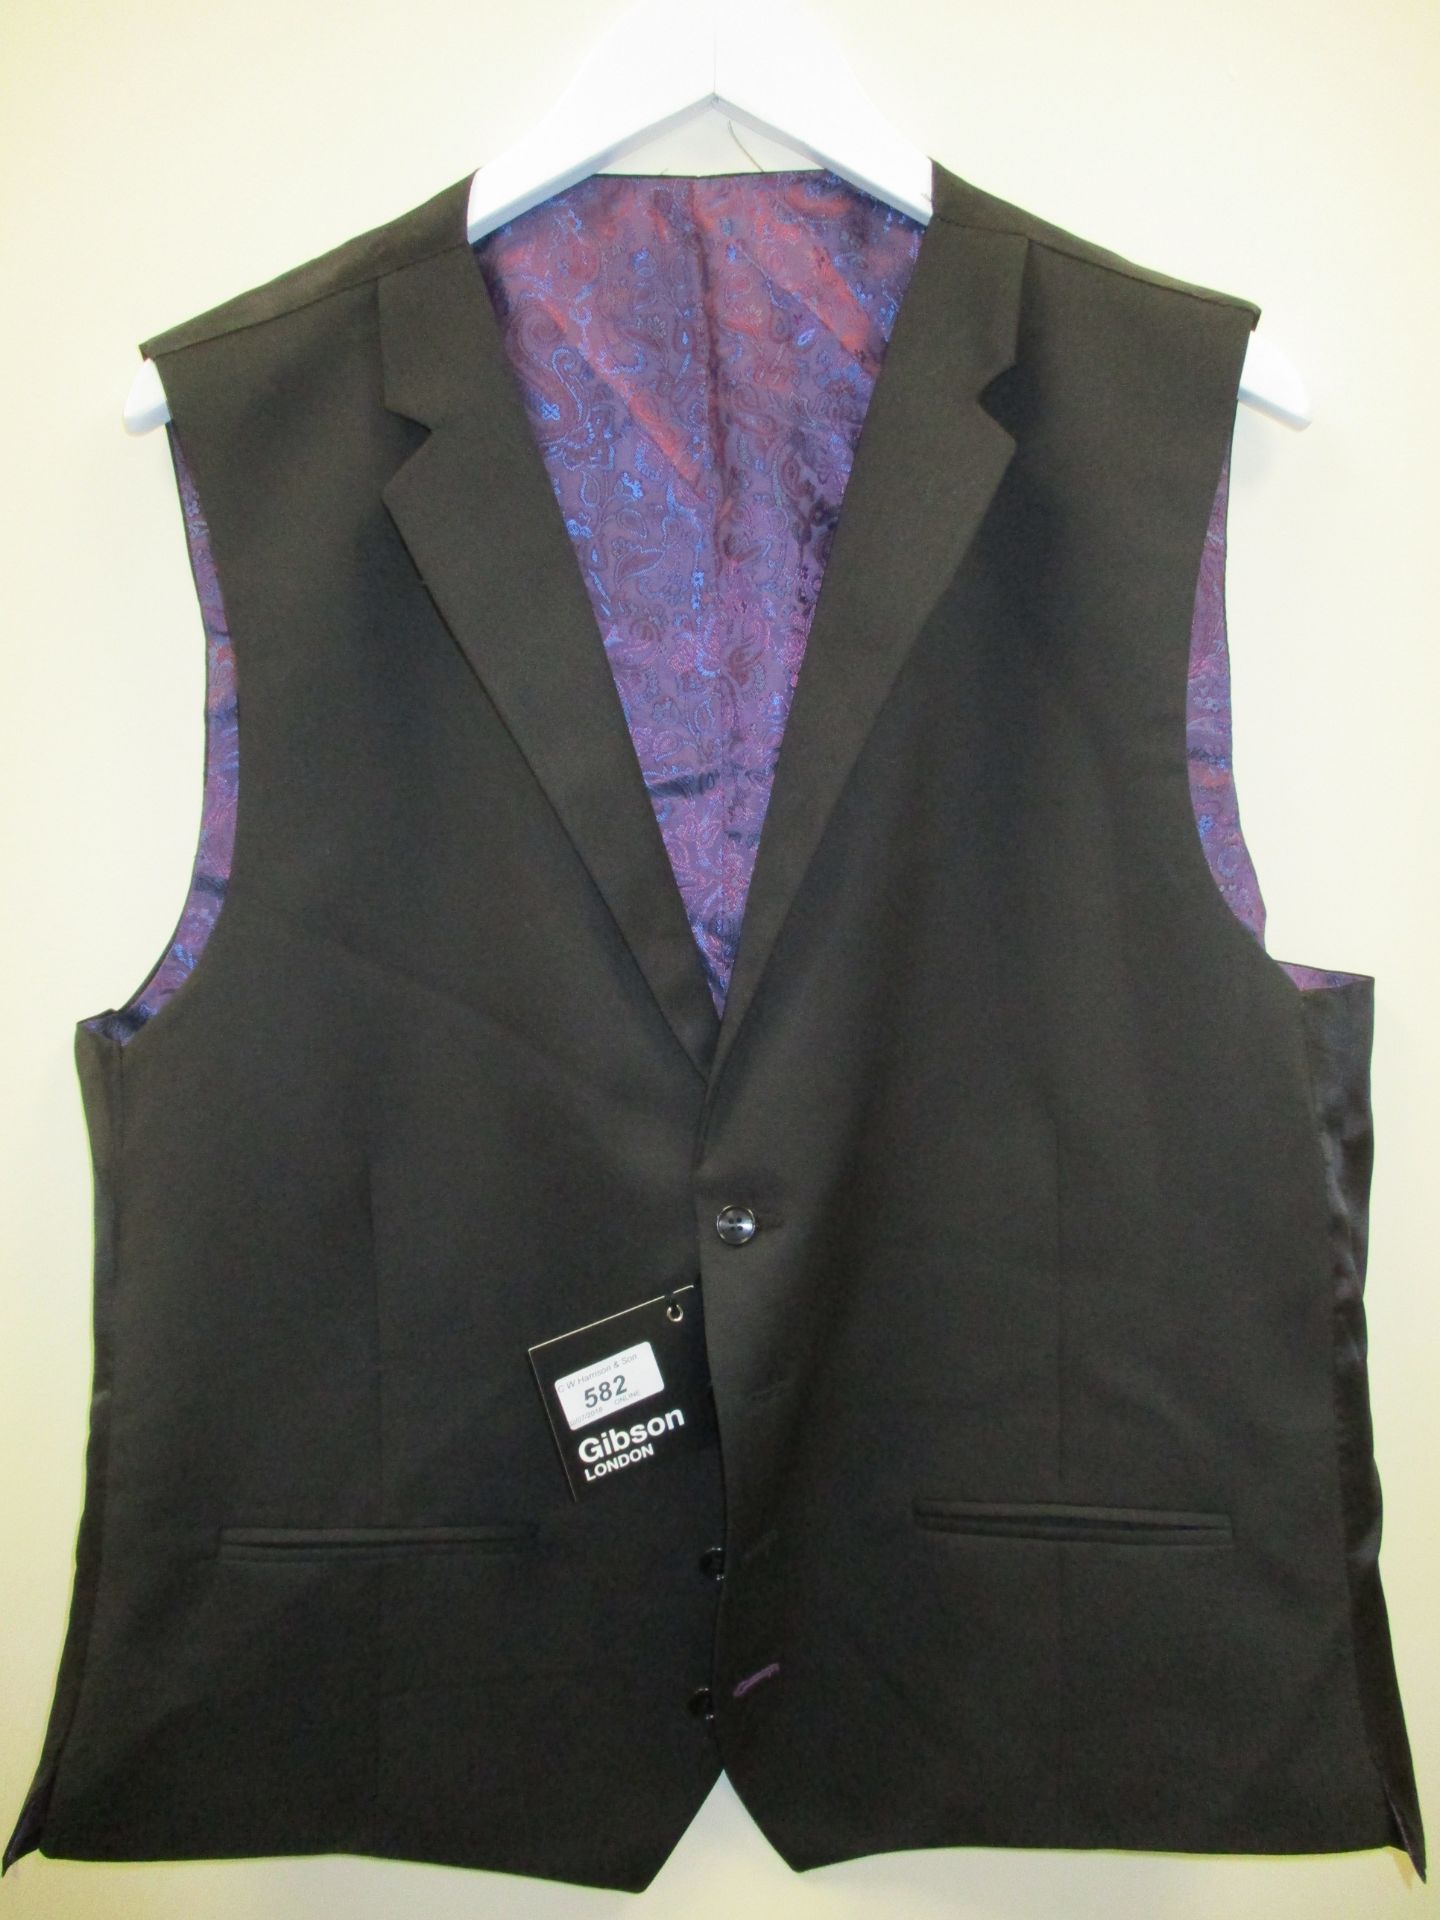 Gibson London waistcoat - black - 44" RRP £60